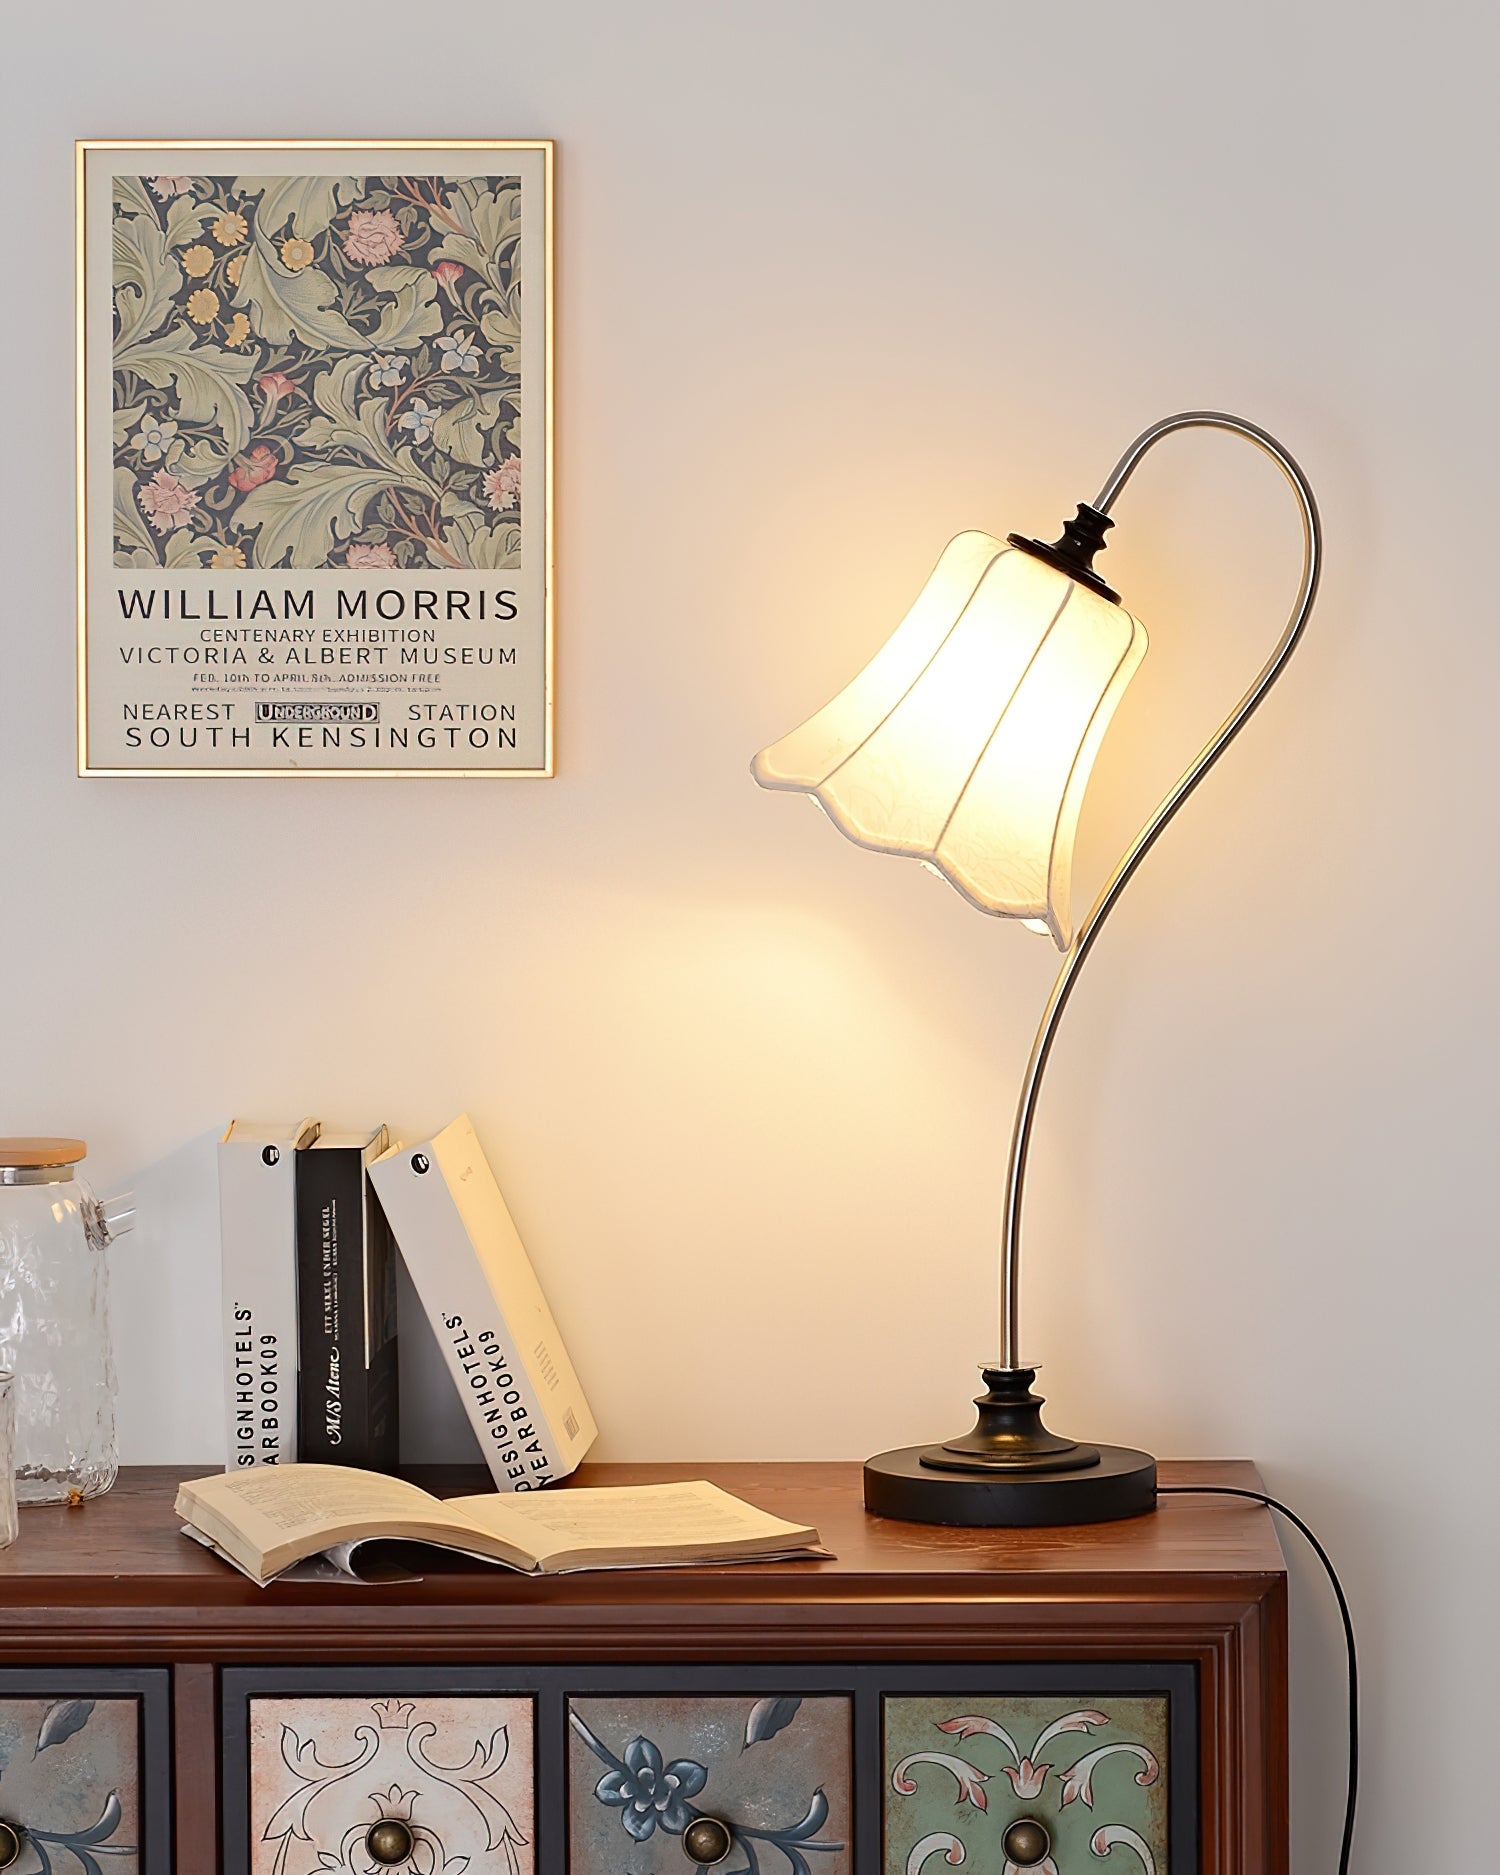 Magnolya Table Lamp